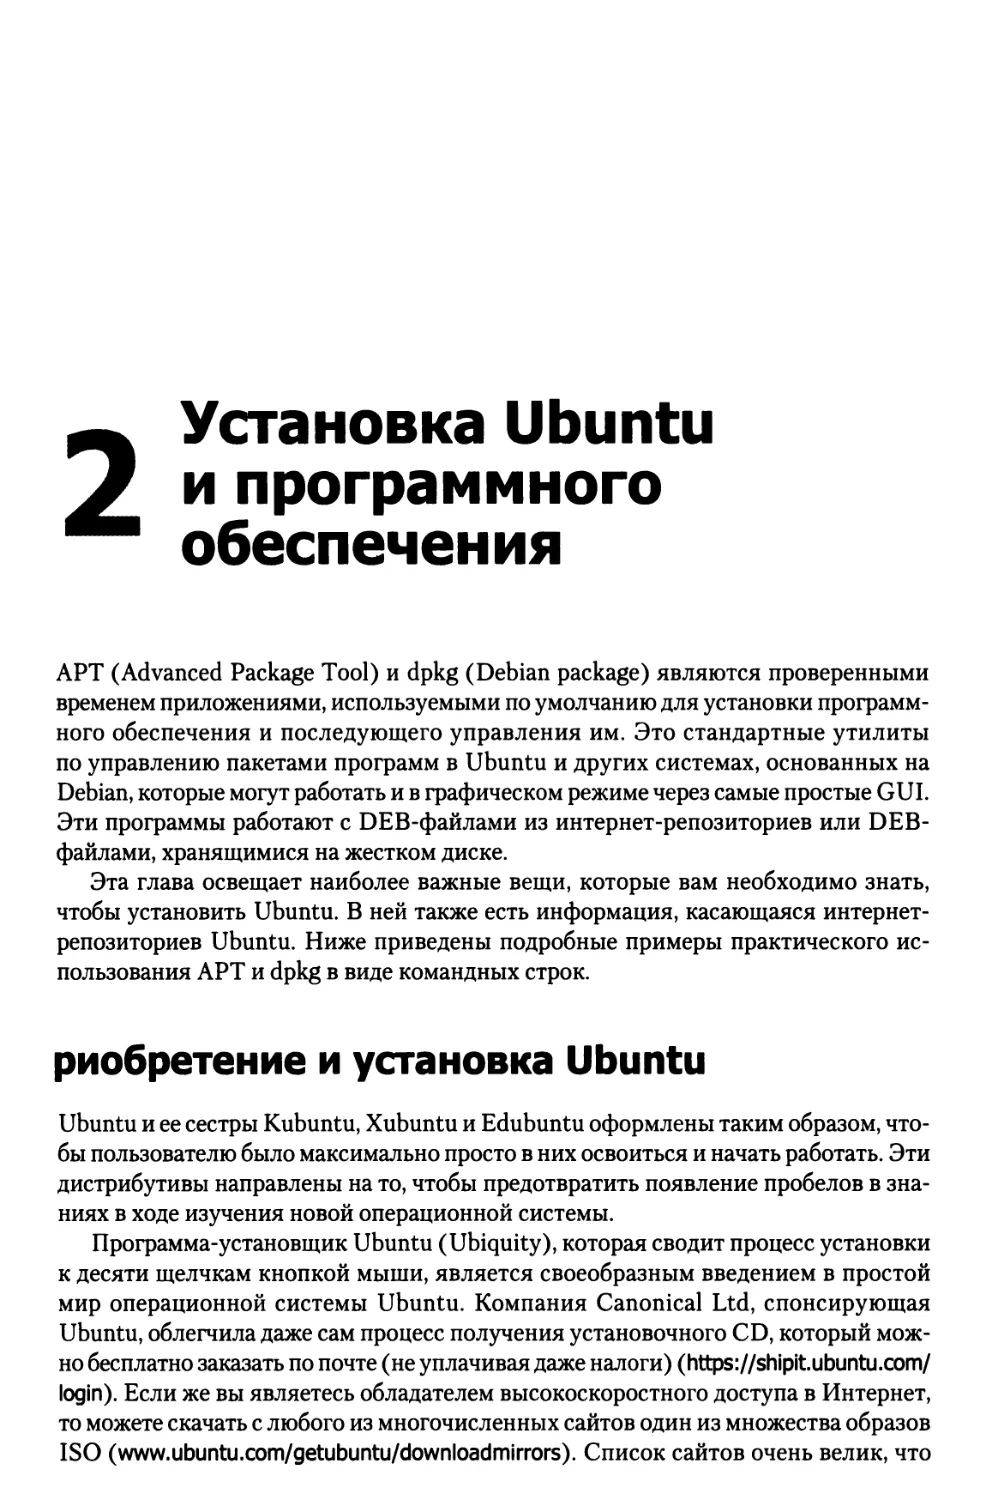 Глава 2. Установка Ubuntu и программного обеспечения